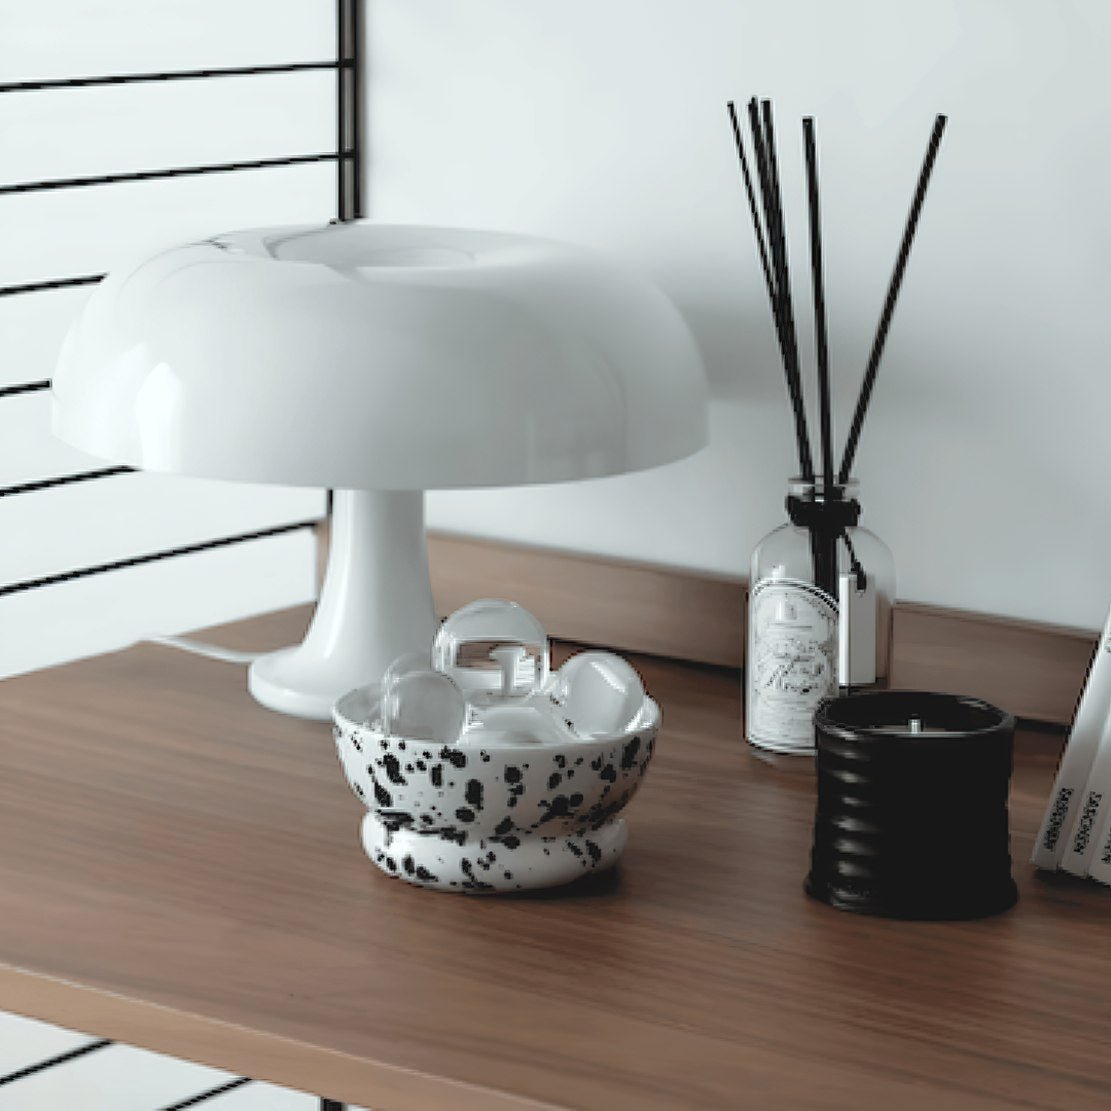 Wood table with mushroom lamp, candle and black & white splash ink ceramic food bowl